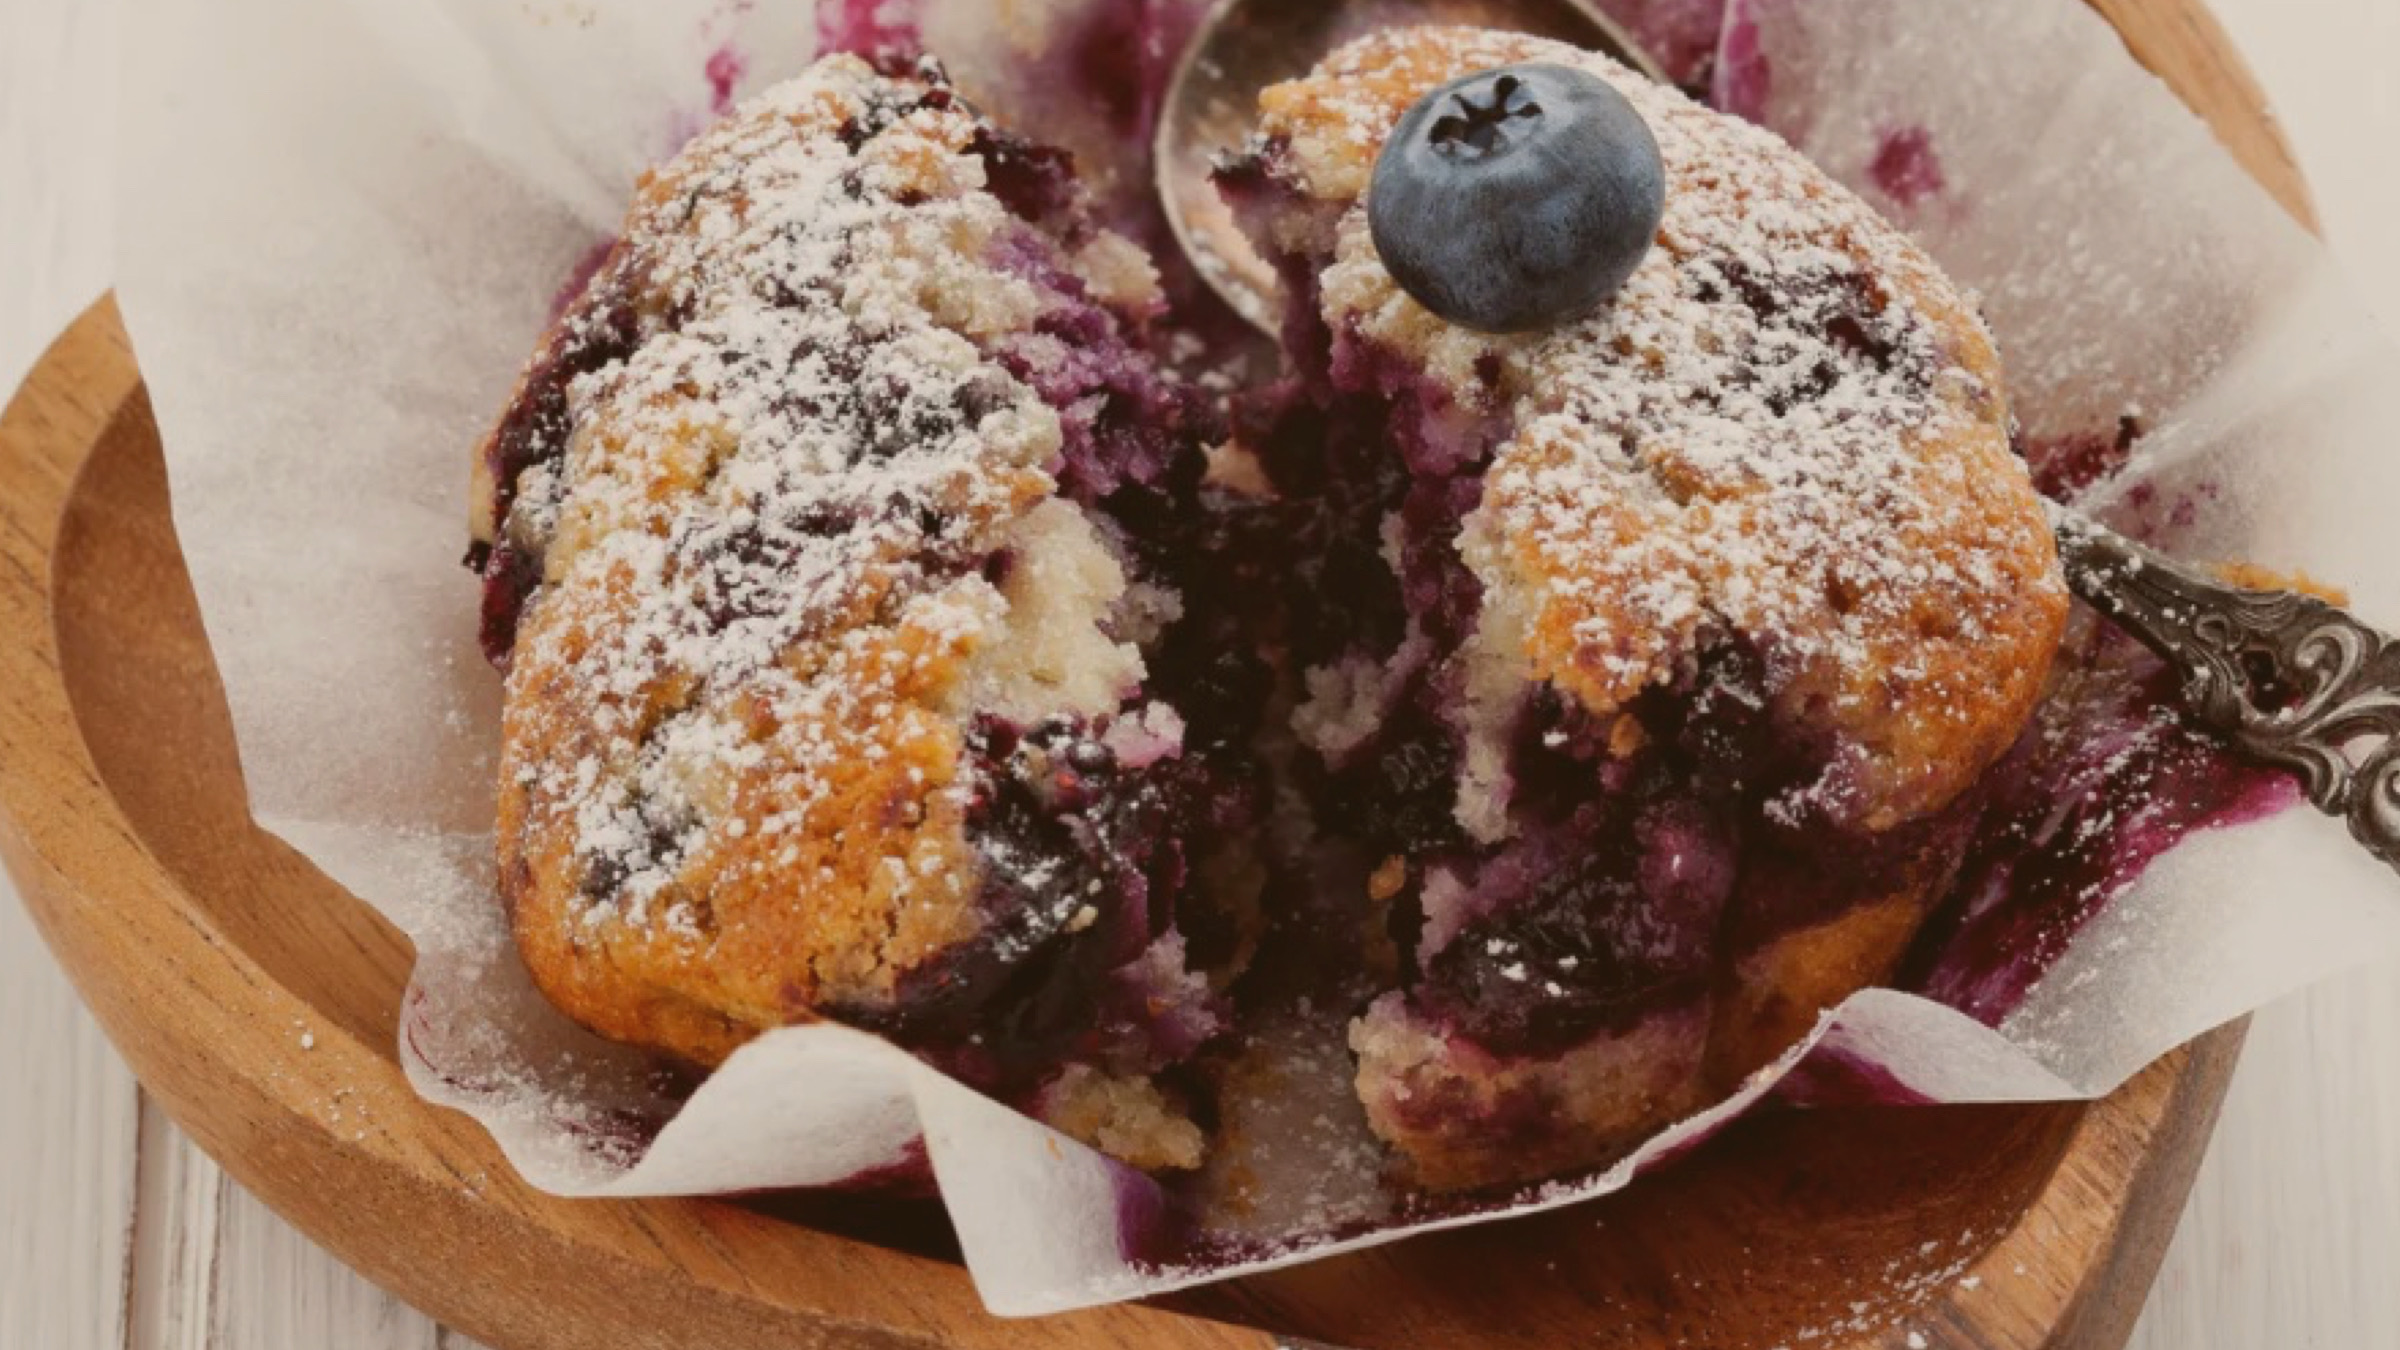 Recipe rē•spin: Blueberry Muffins